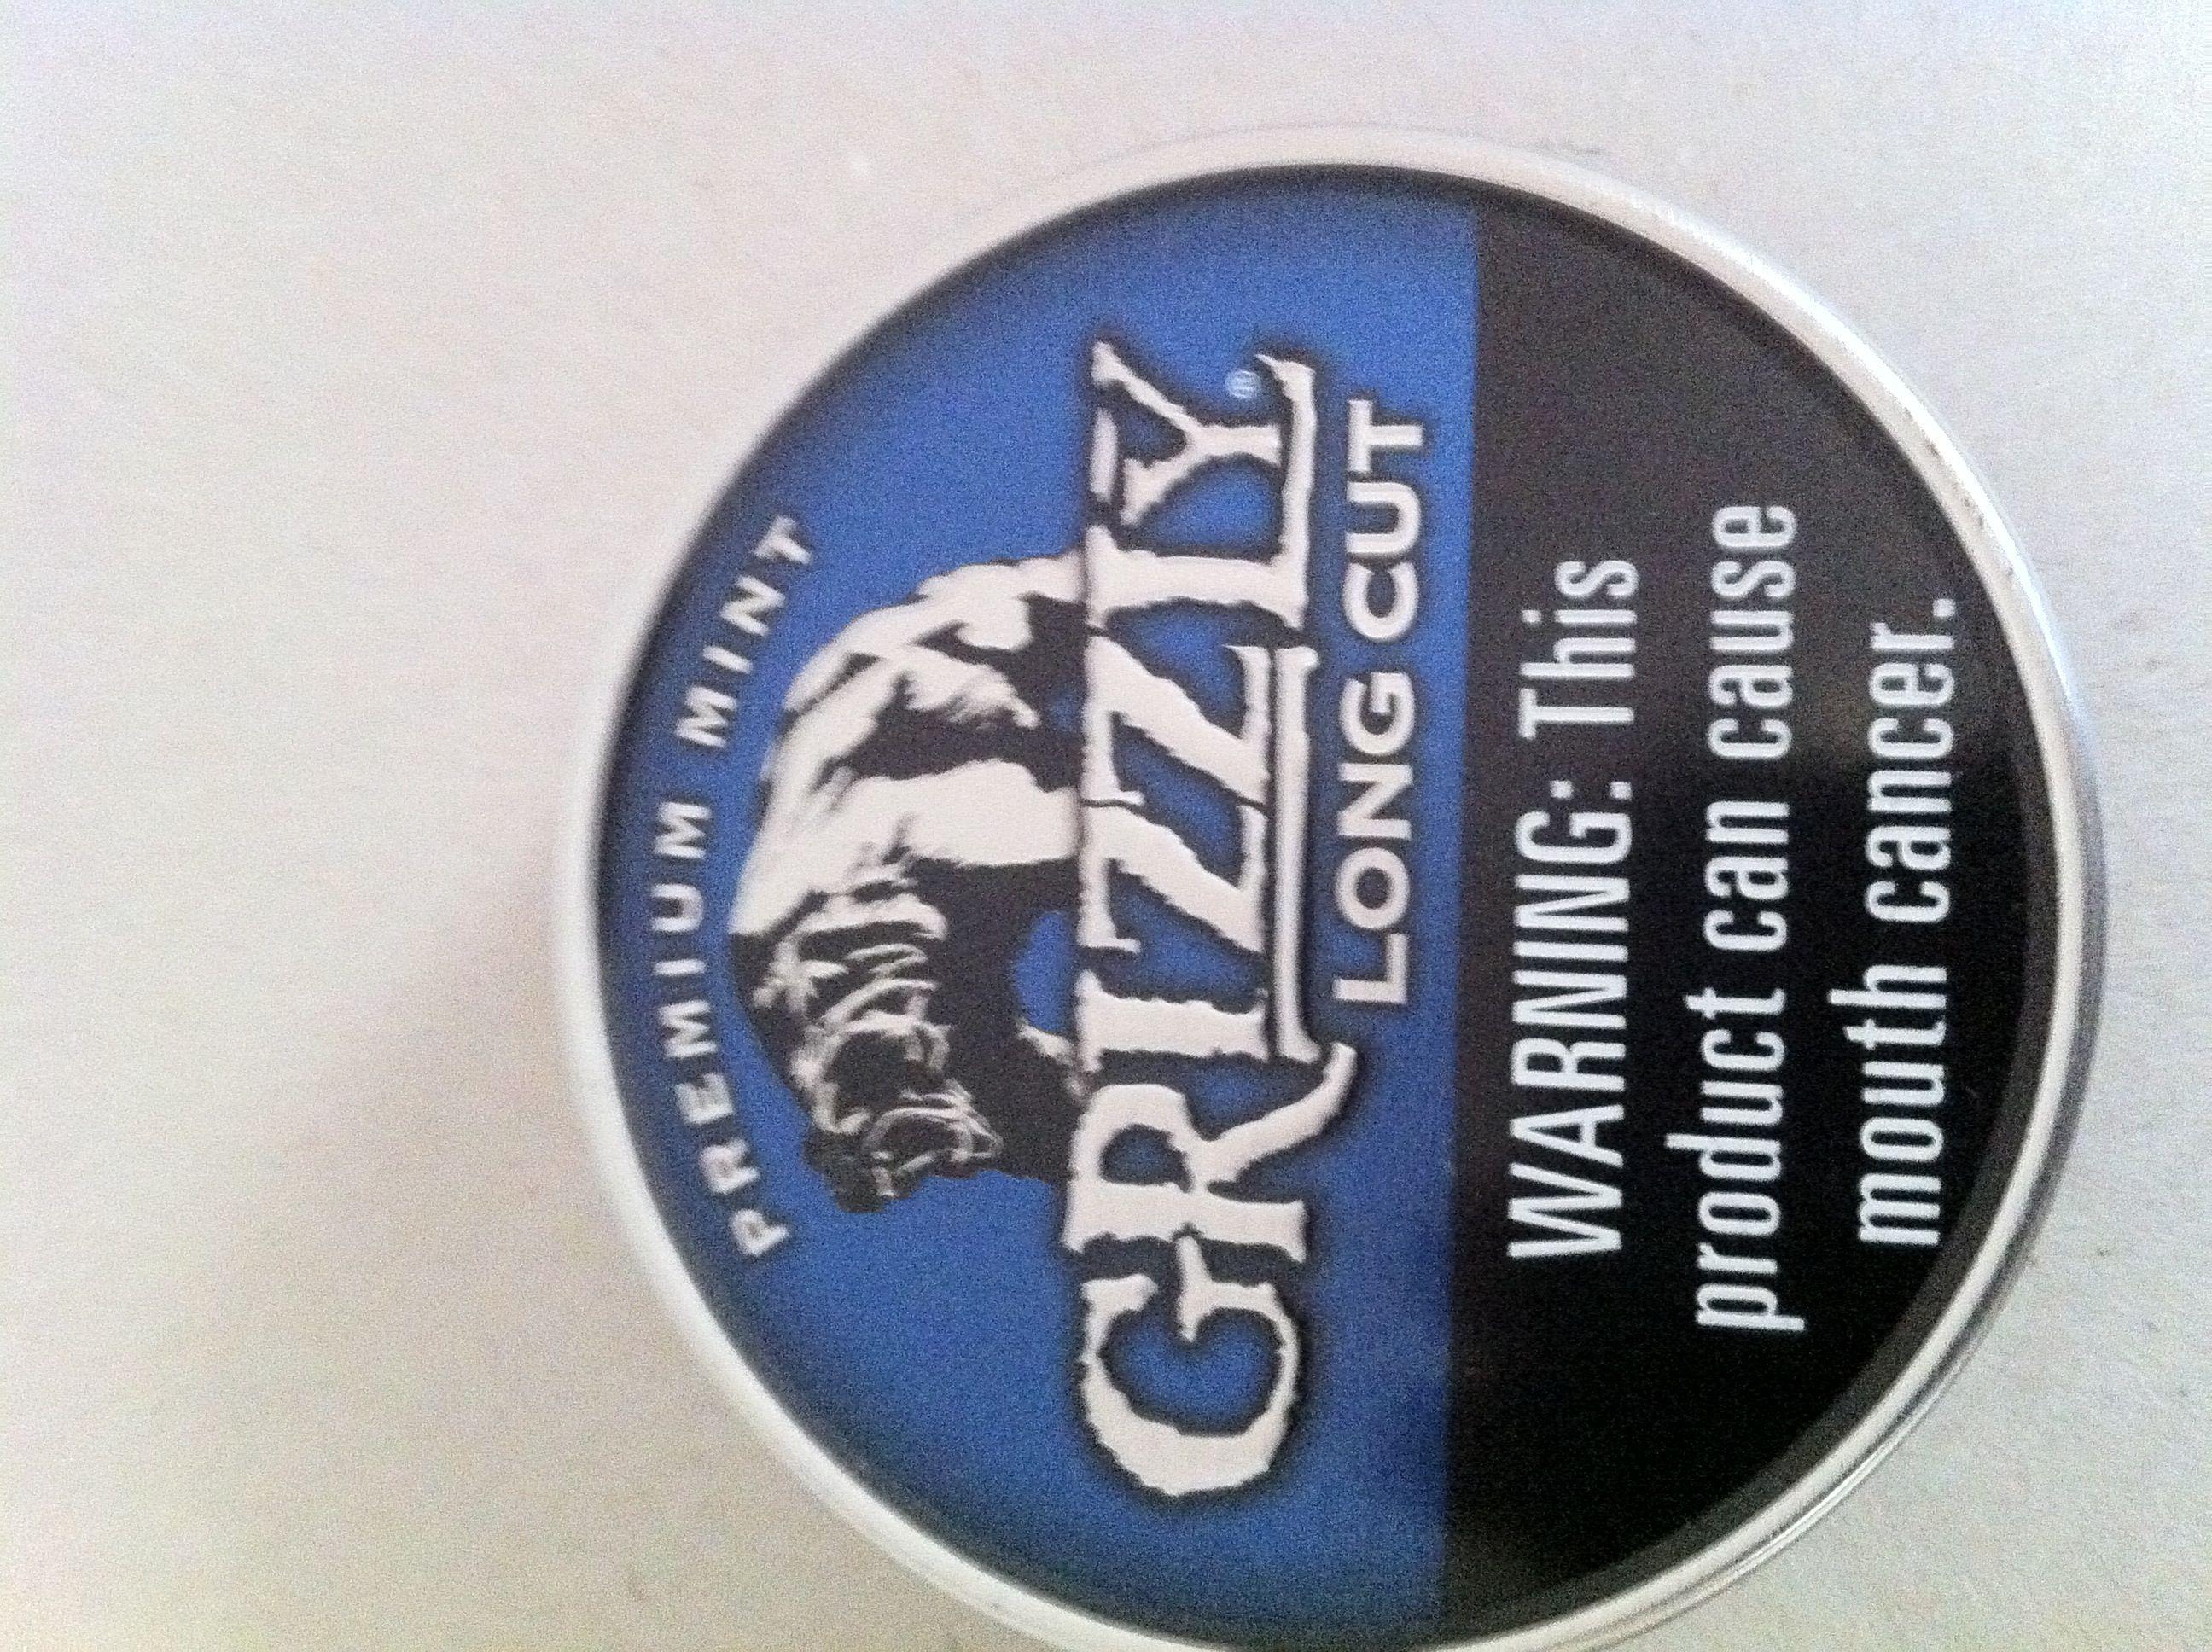 Grizzly Tobacco Logo - Grizzly (tobacco)